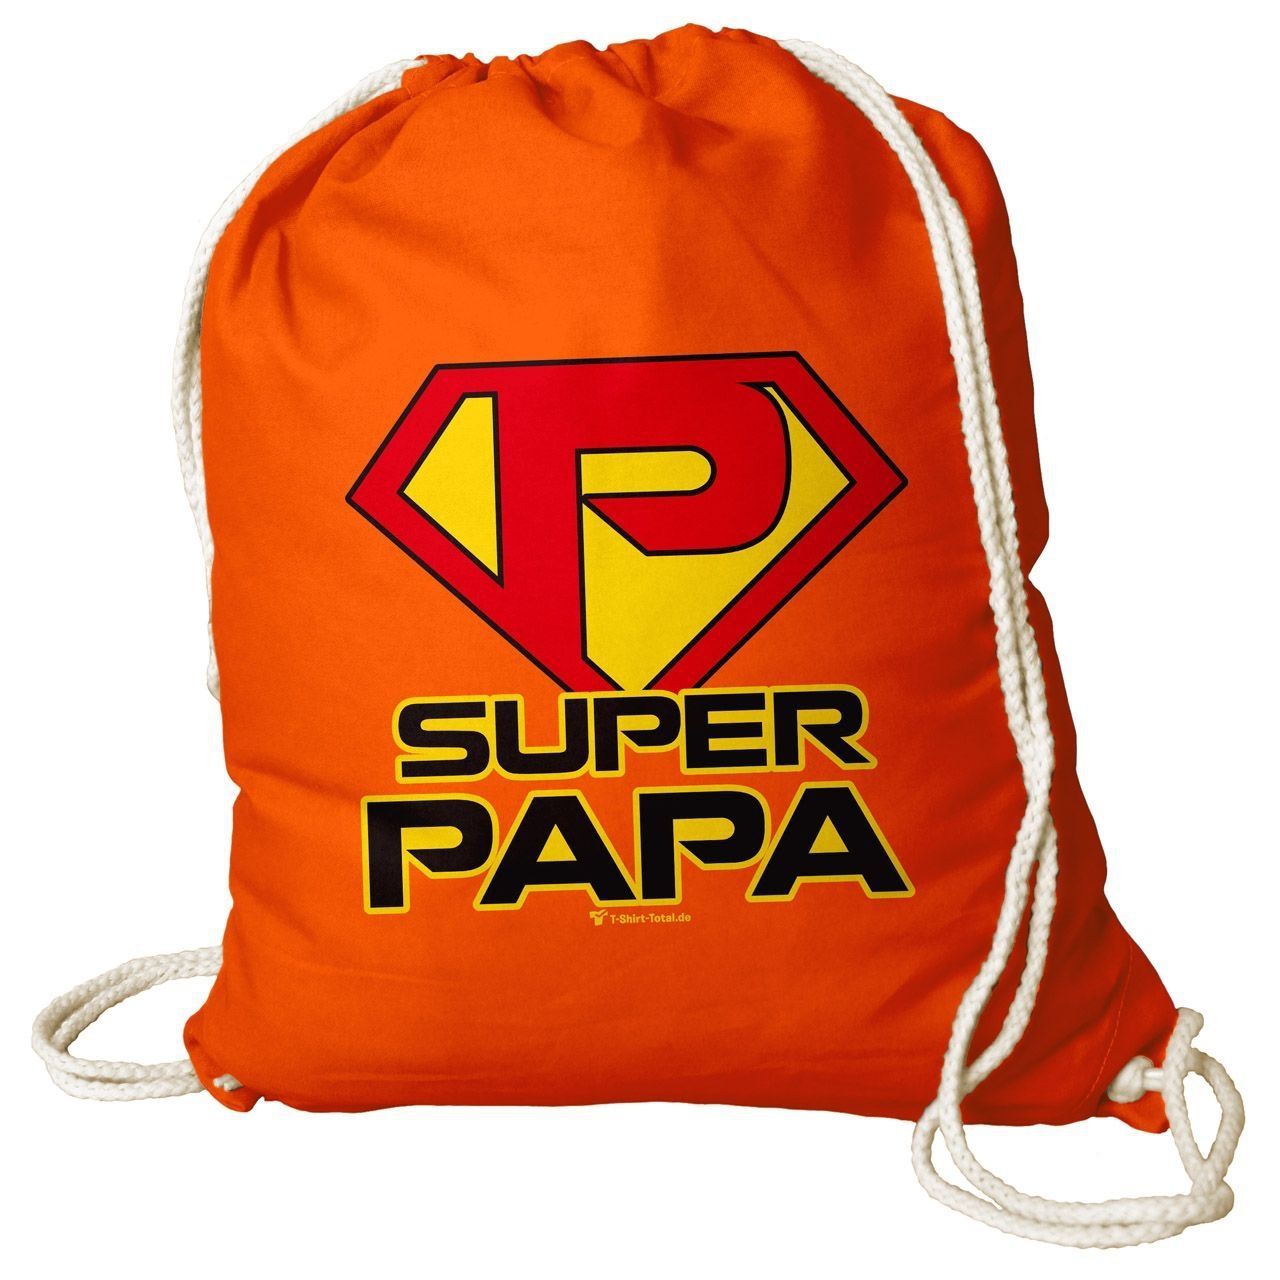 Super Papa Rucksack Beutel orange